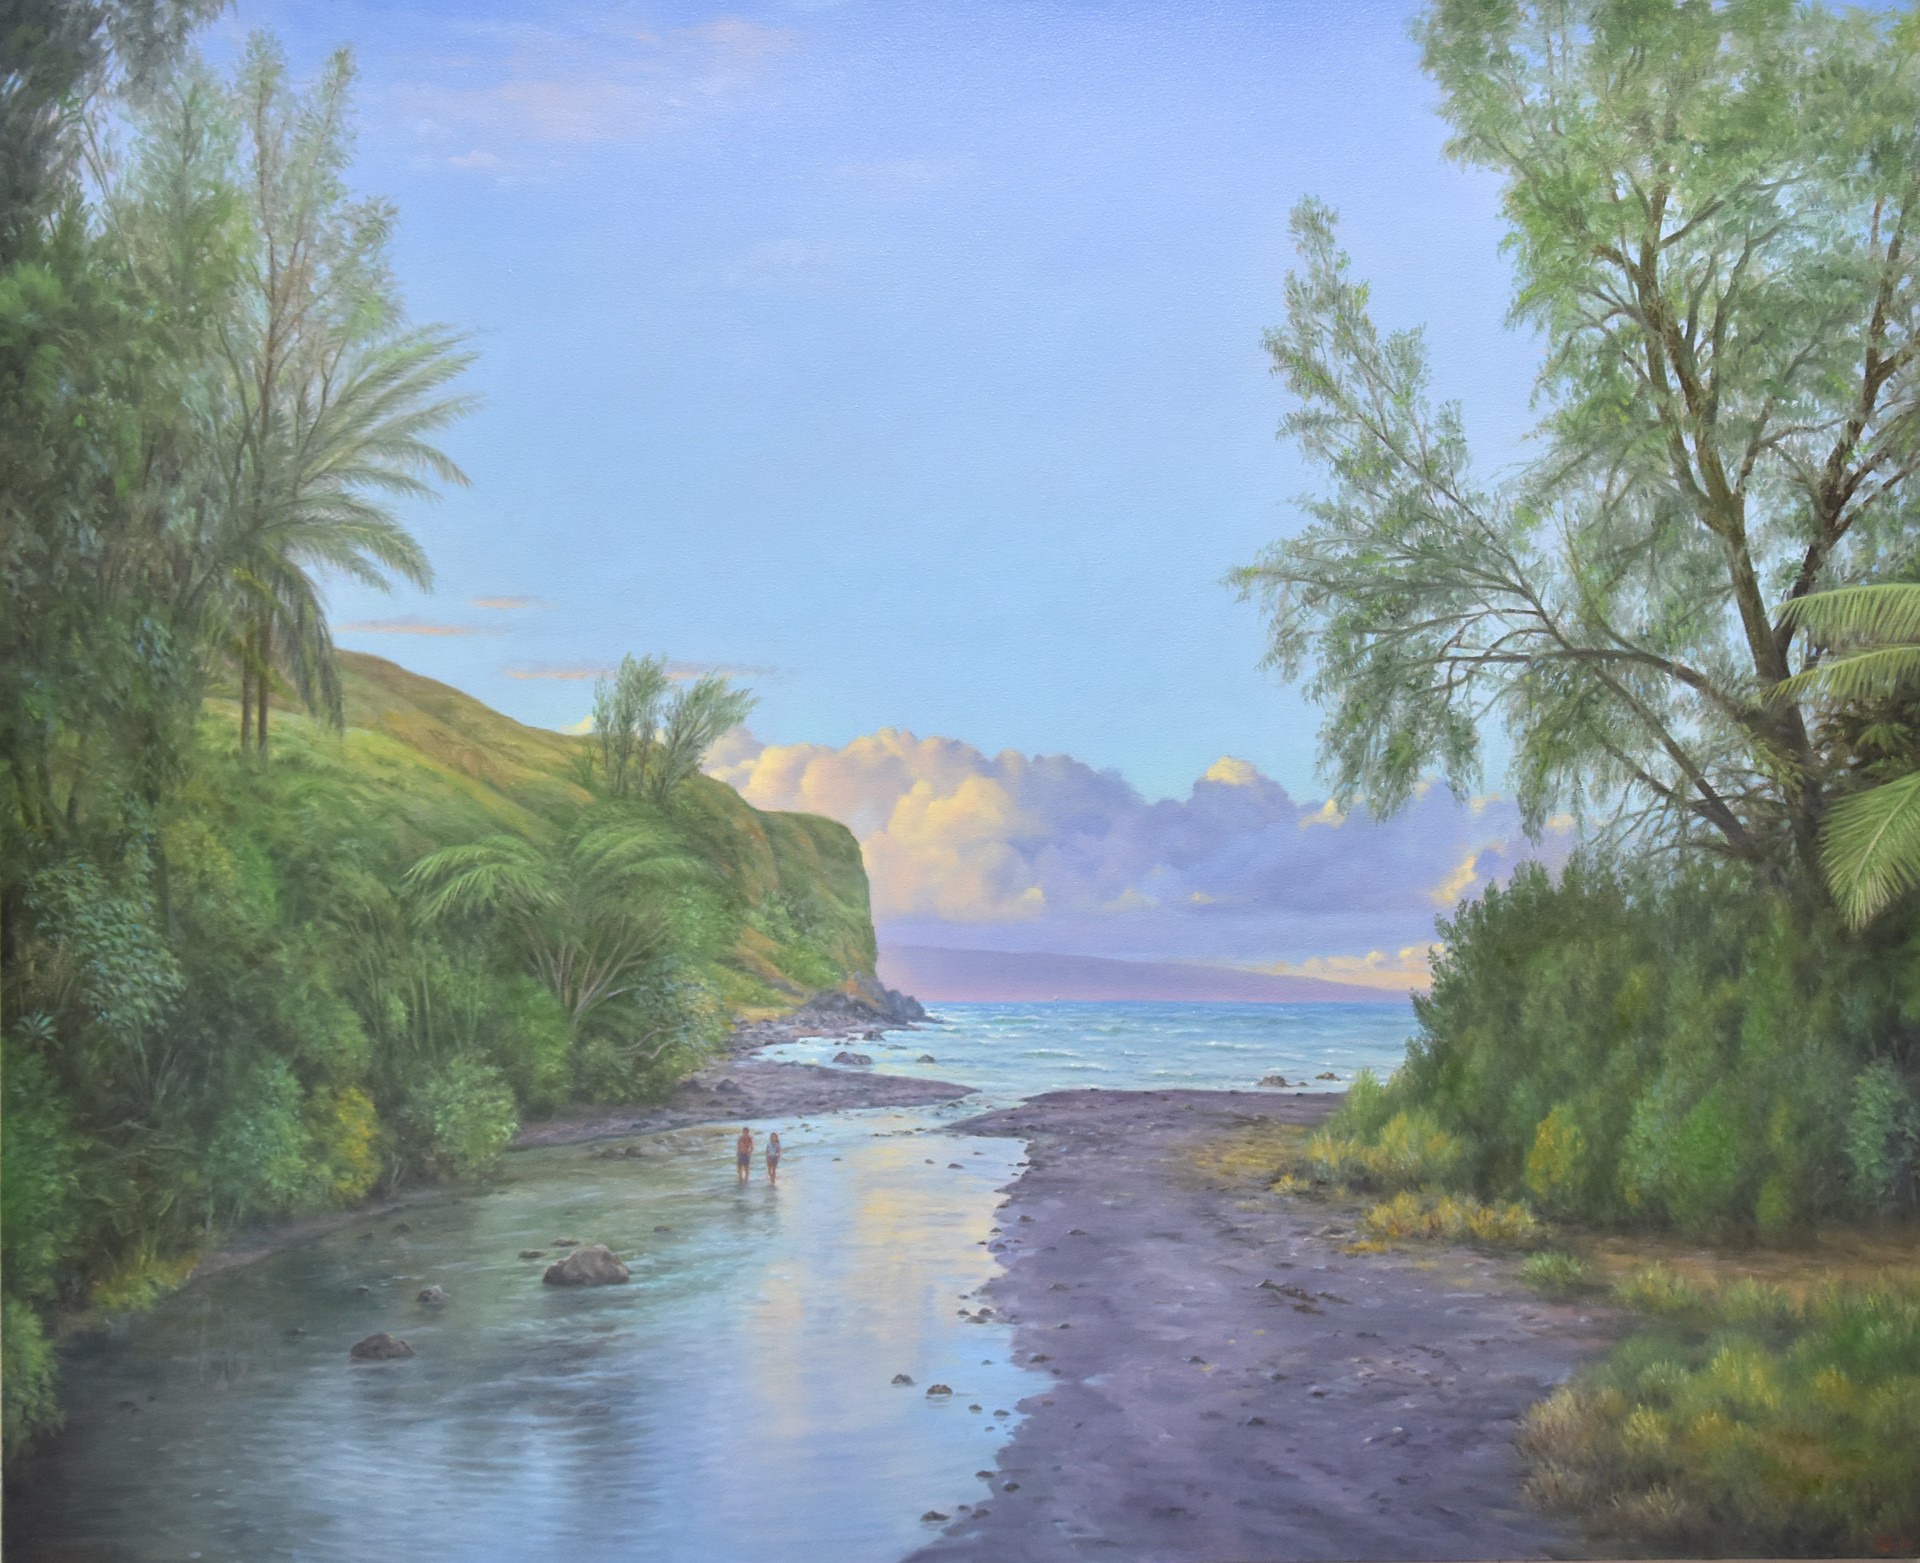 Paradisial (Maui) by Willard Dixon